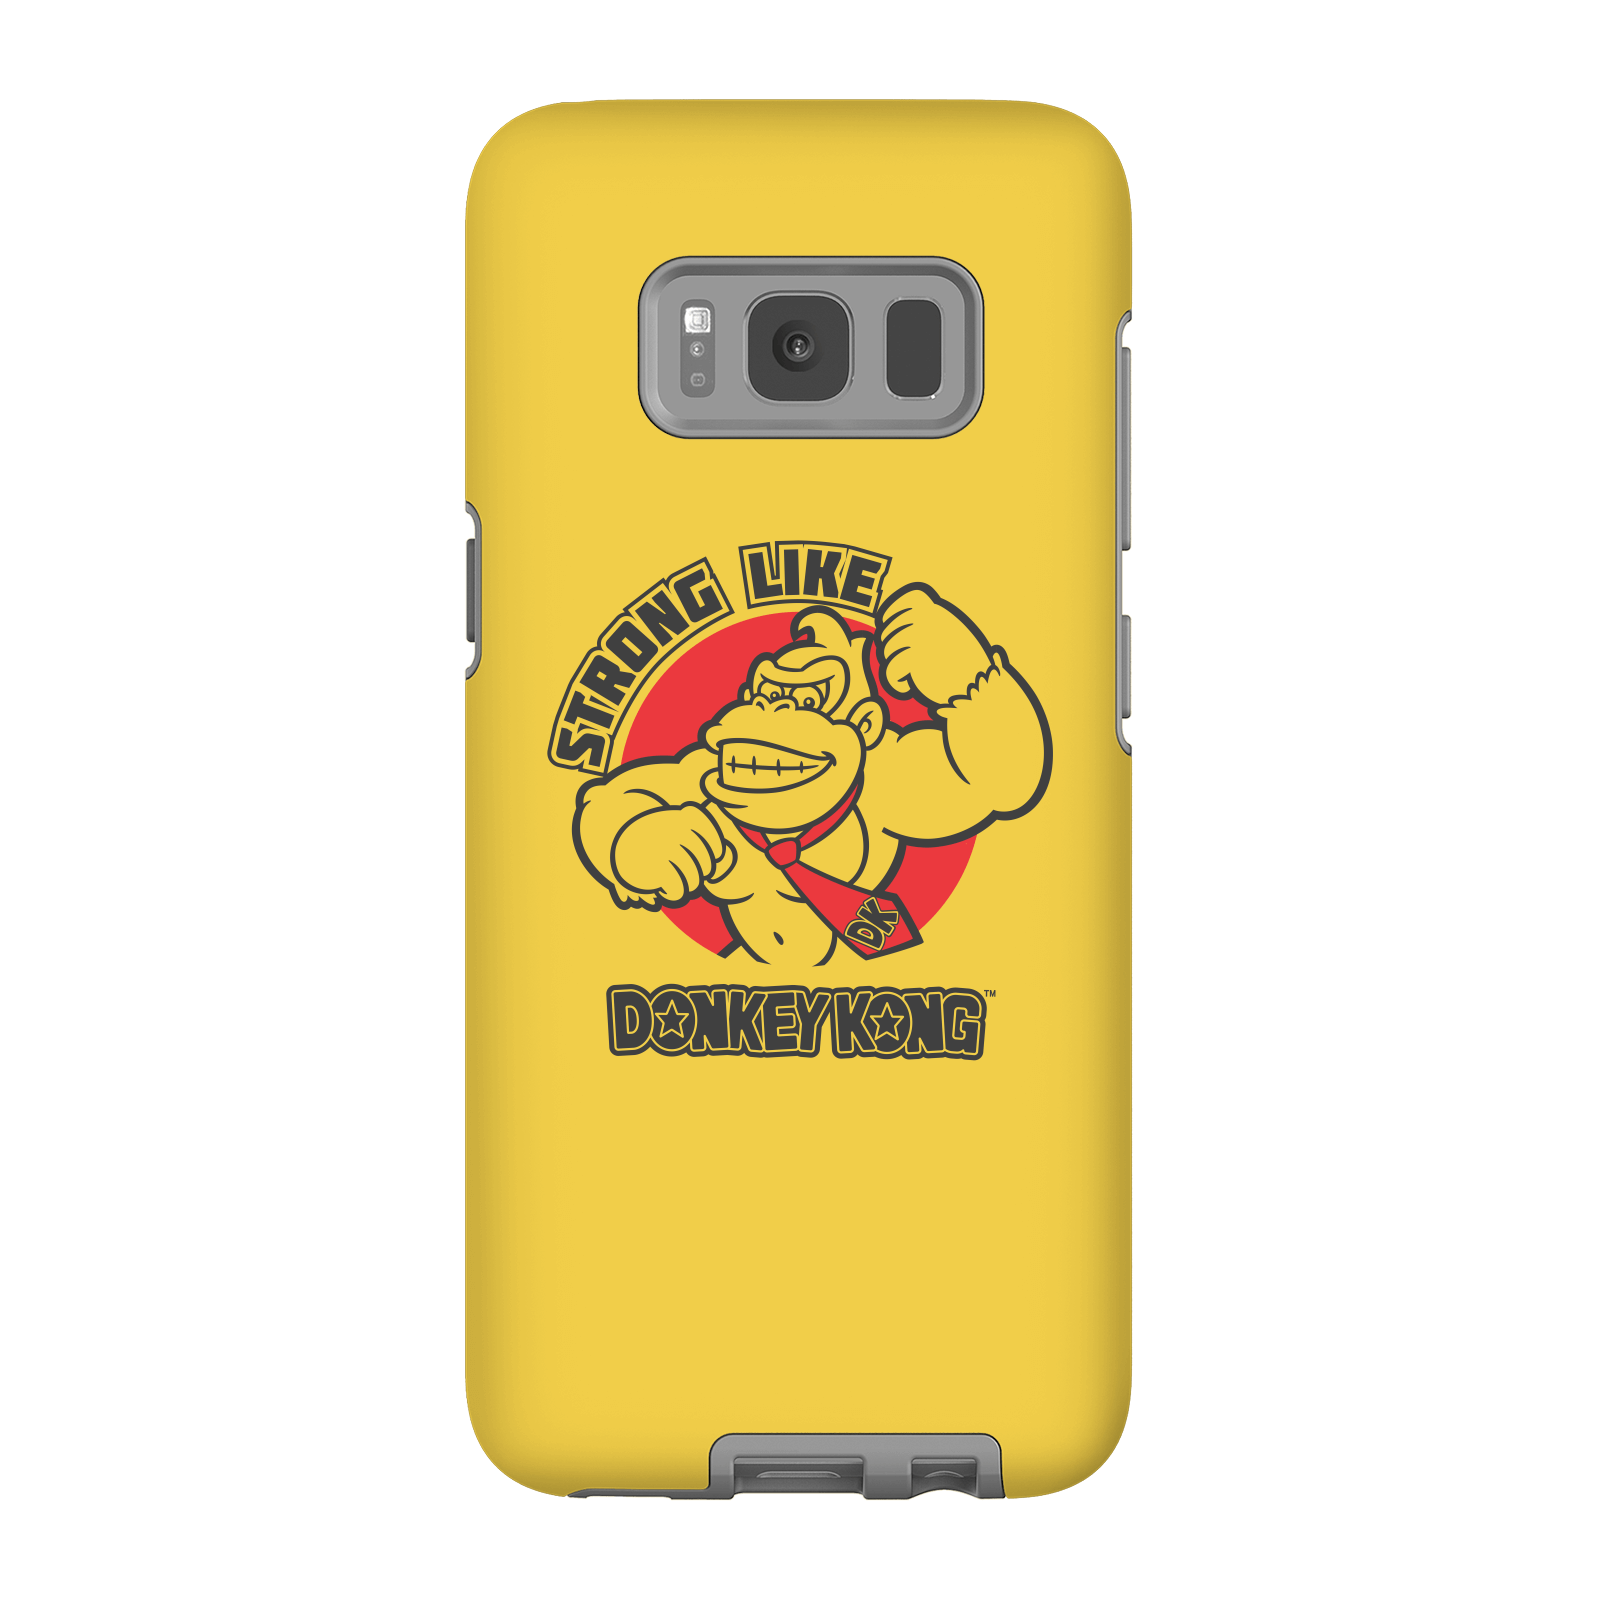 Nintendo Donkey Kong Strong Like Donkey Kong Phone Case - Samsung S8 - Tough Case - Gloss